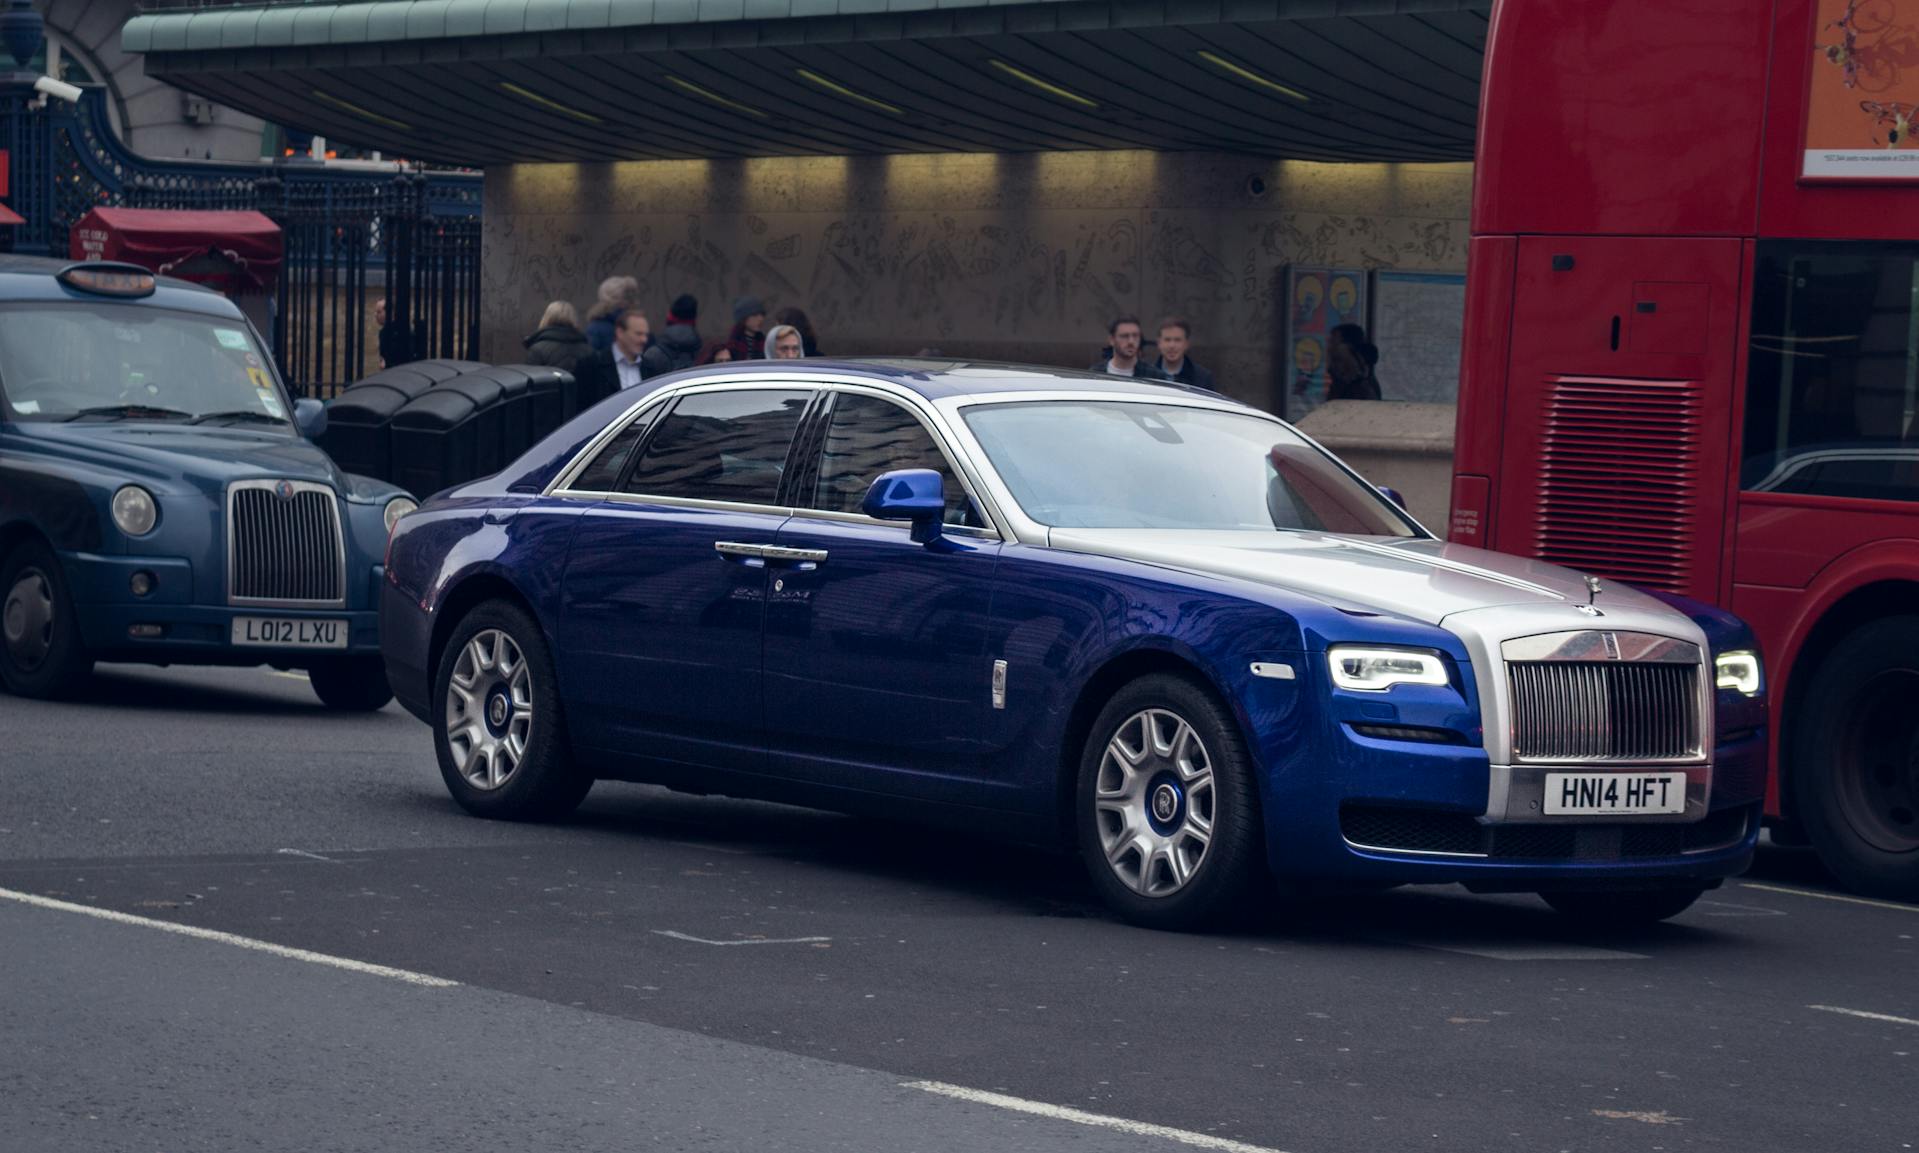 A Rolls-Royce sedan | Source: Pexels